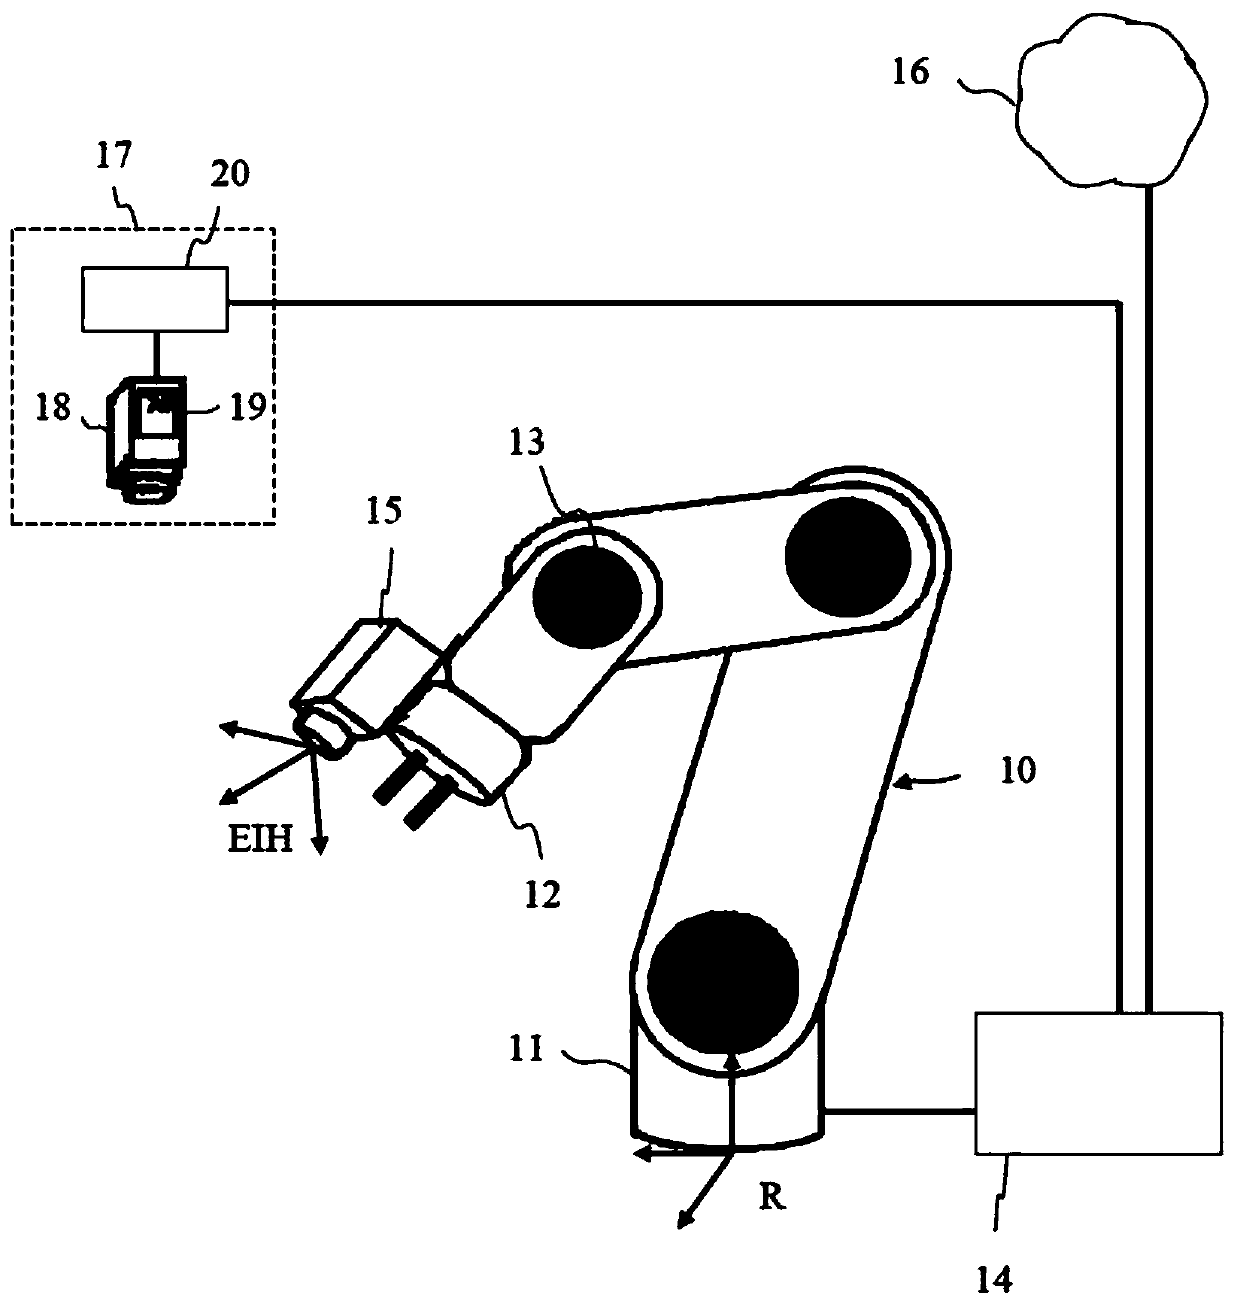 Method for correcting eye-to-hand through robot arm